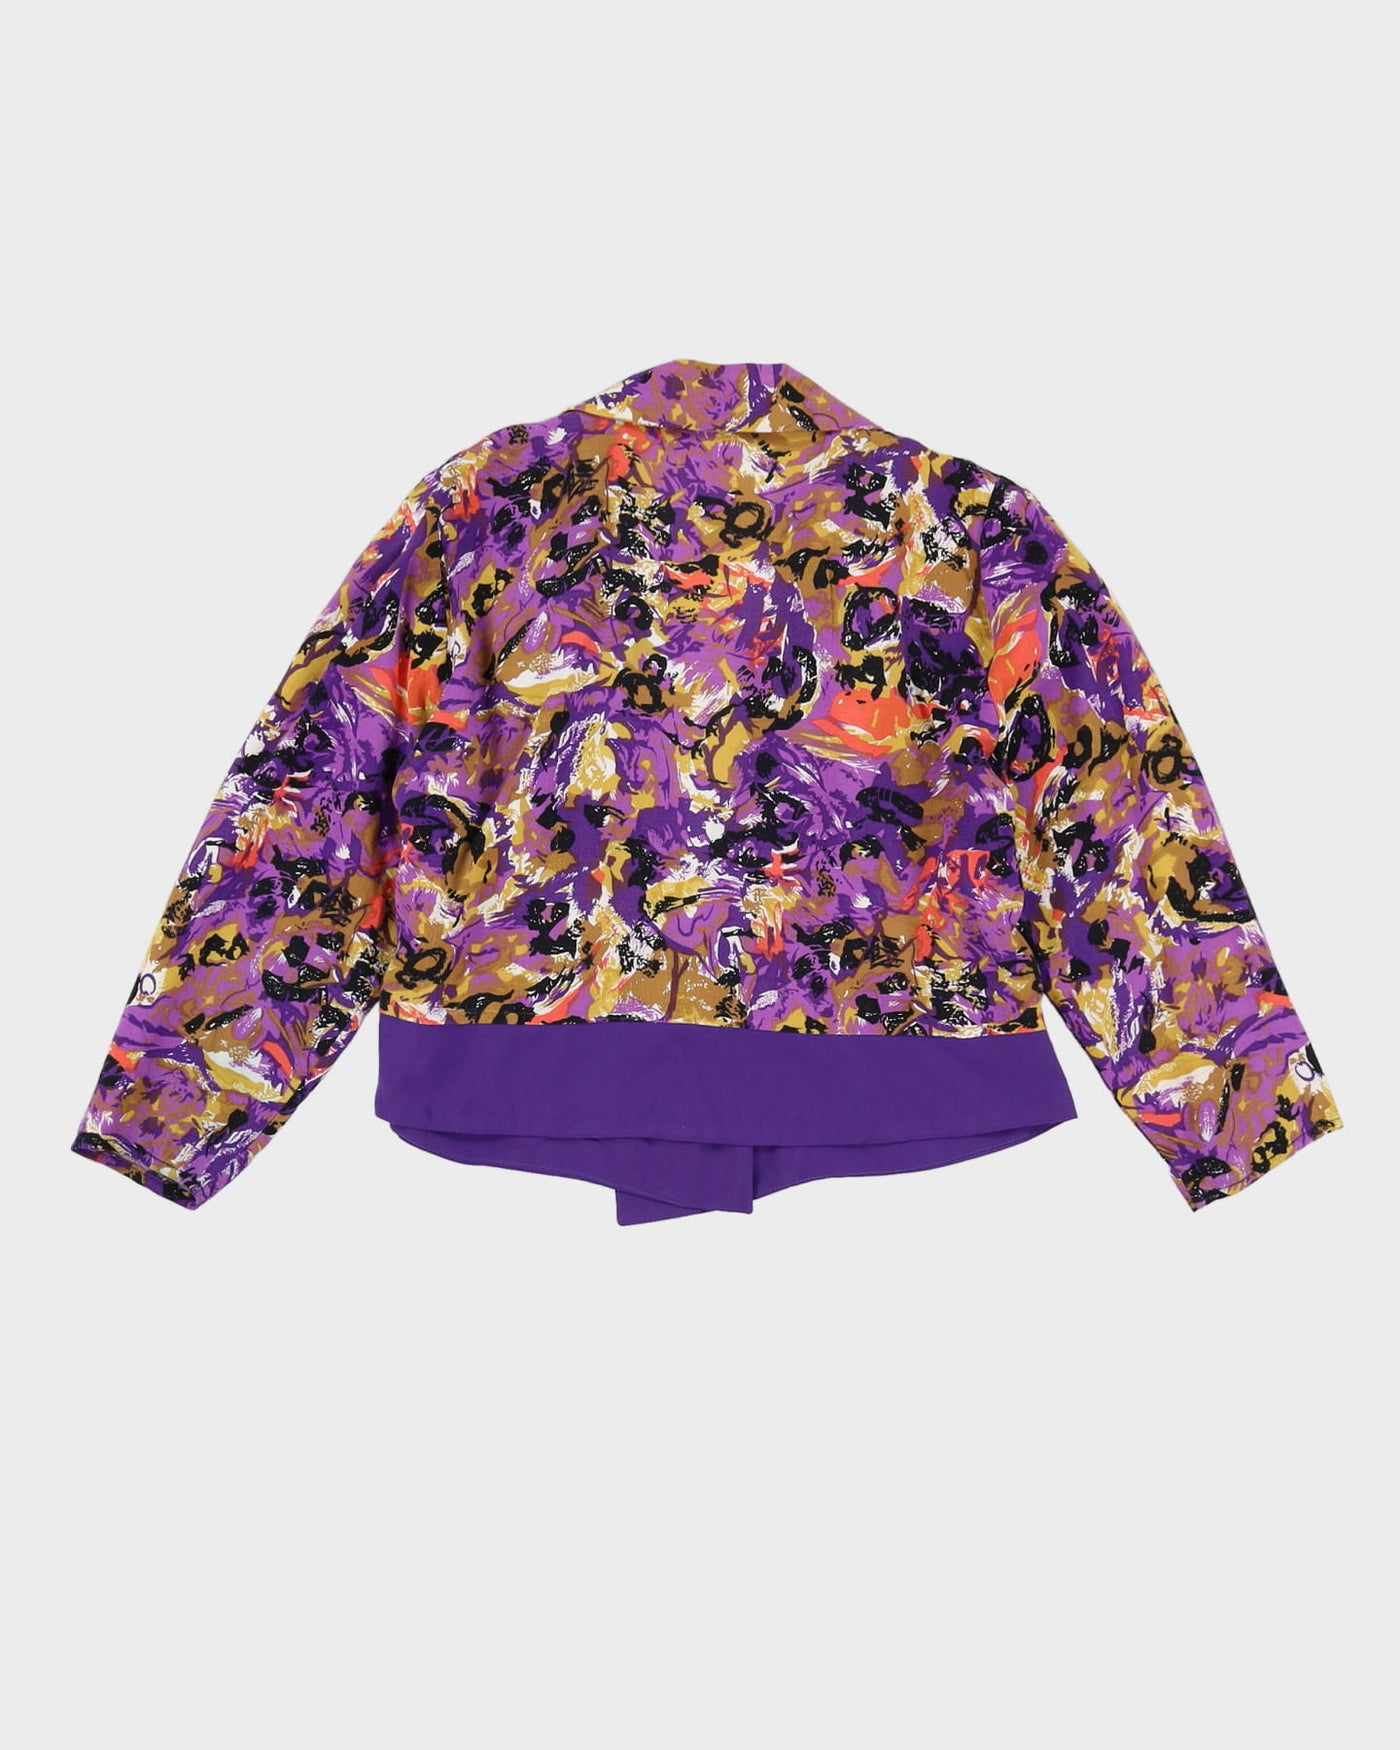 Vintage 1990s Purple Patterned Cropped Blouse - S